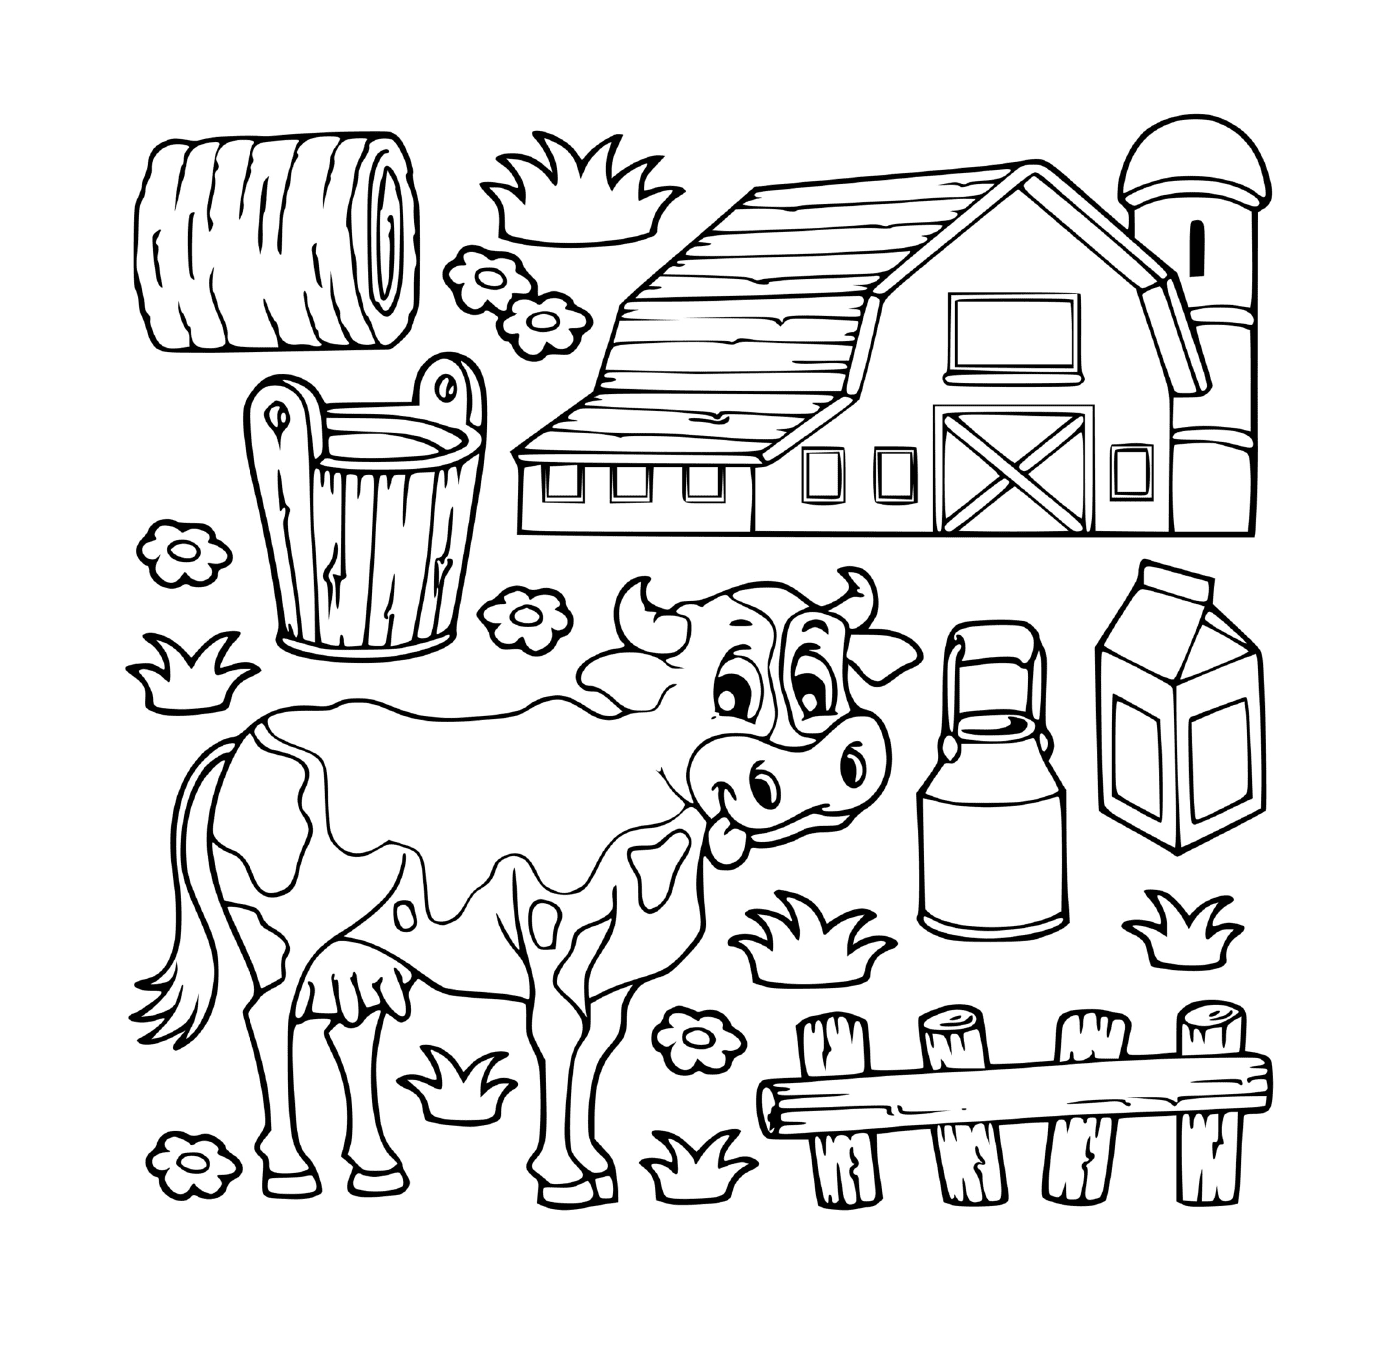  Vaca lechera en una granja 